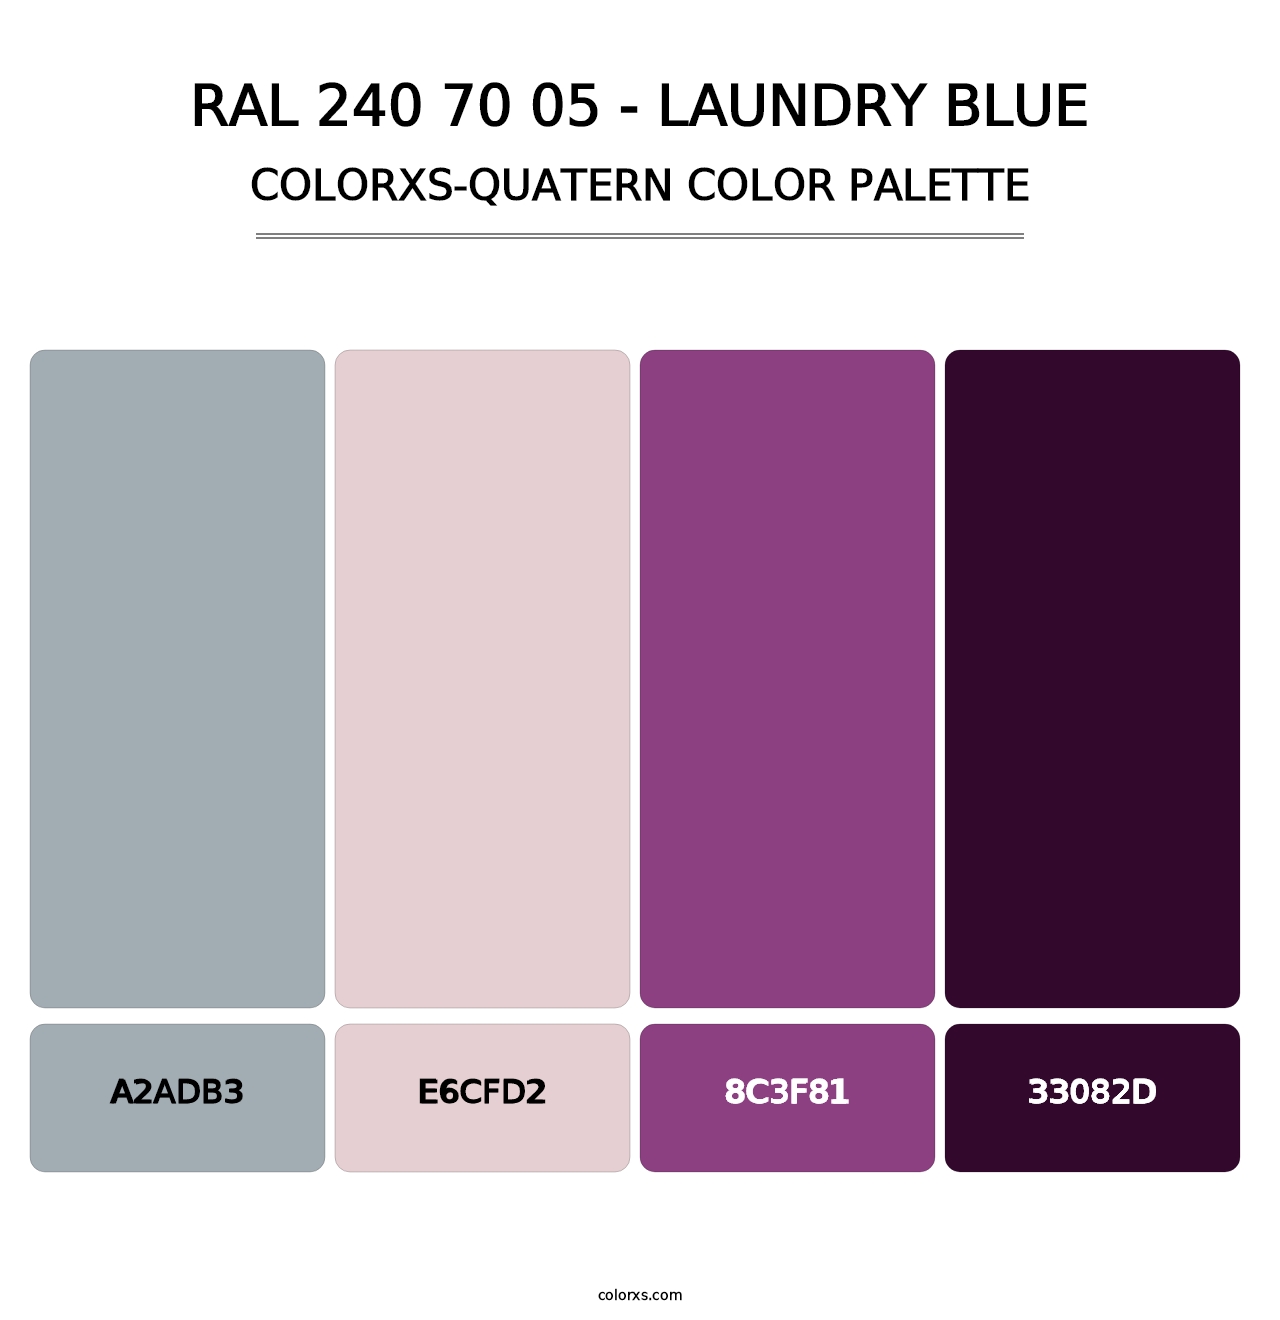 RAL 240 70 05 - Laundry Blue - Colorxs Quatern Palette